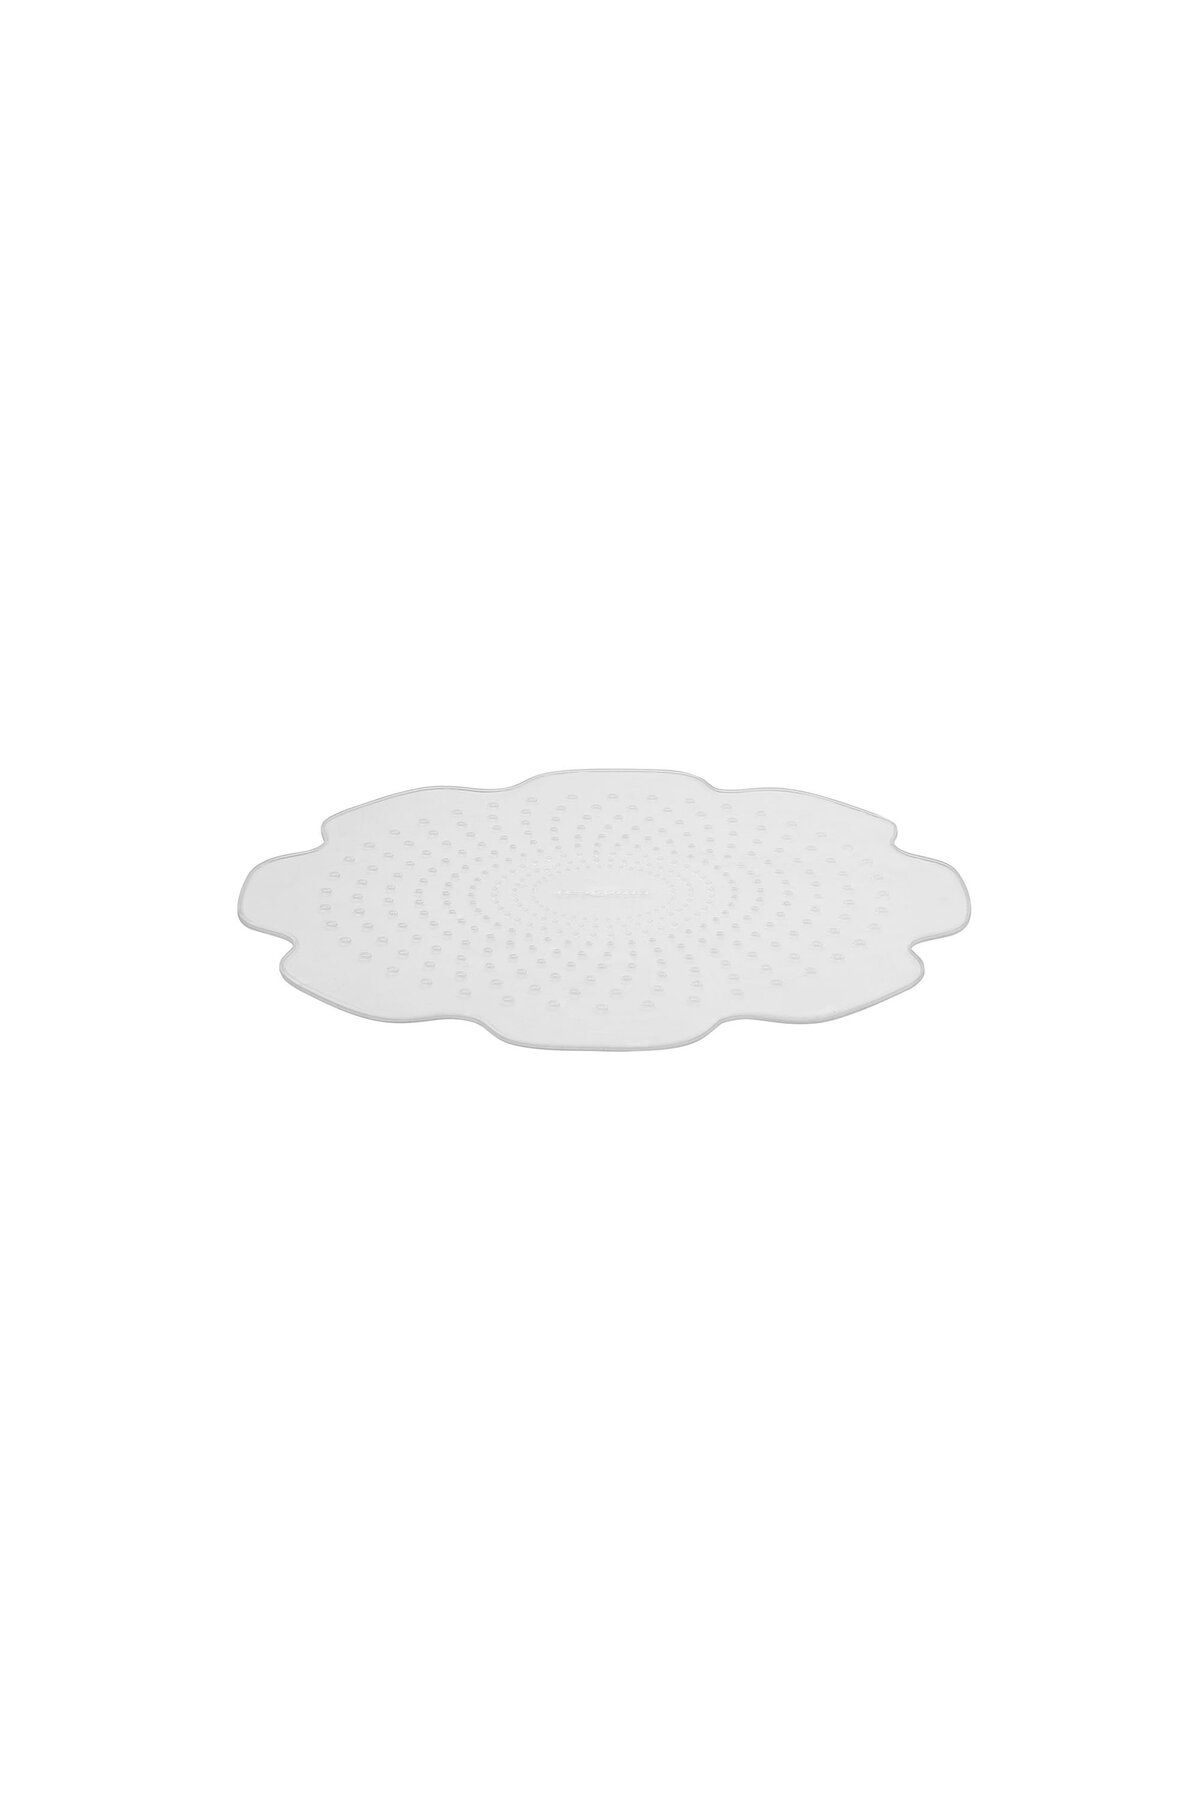 TESCOMA 897110 2'li Silikon Kapak Seti - Beyaz - 17 cm + 23 cm